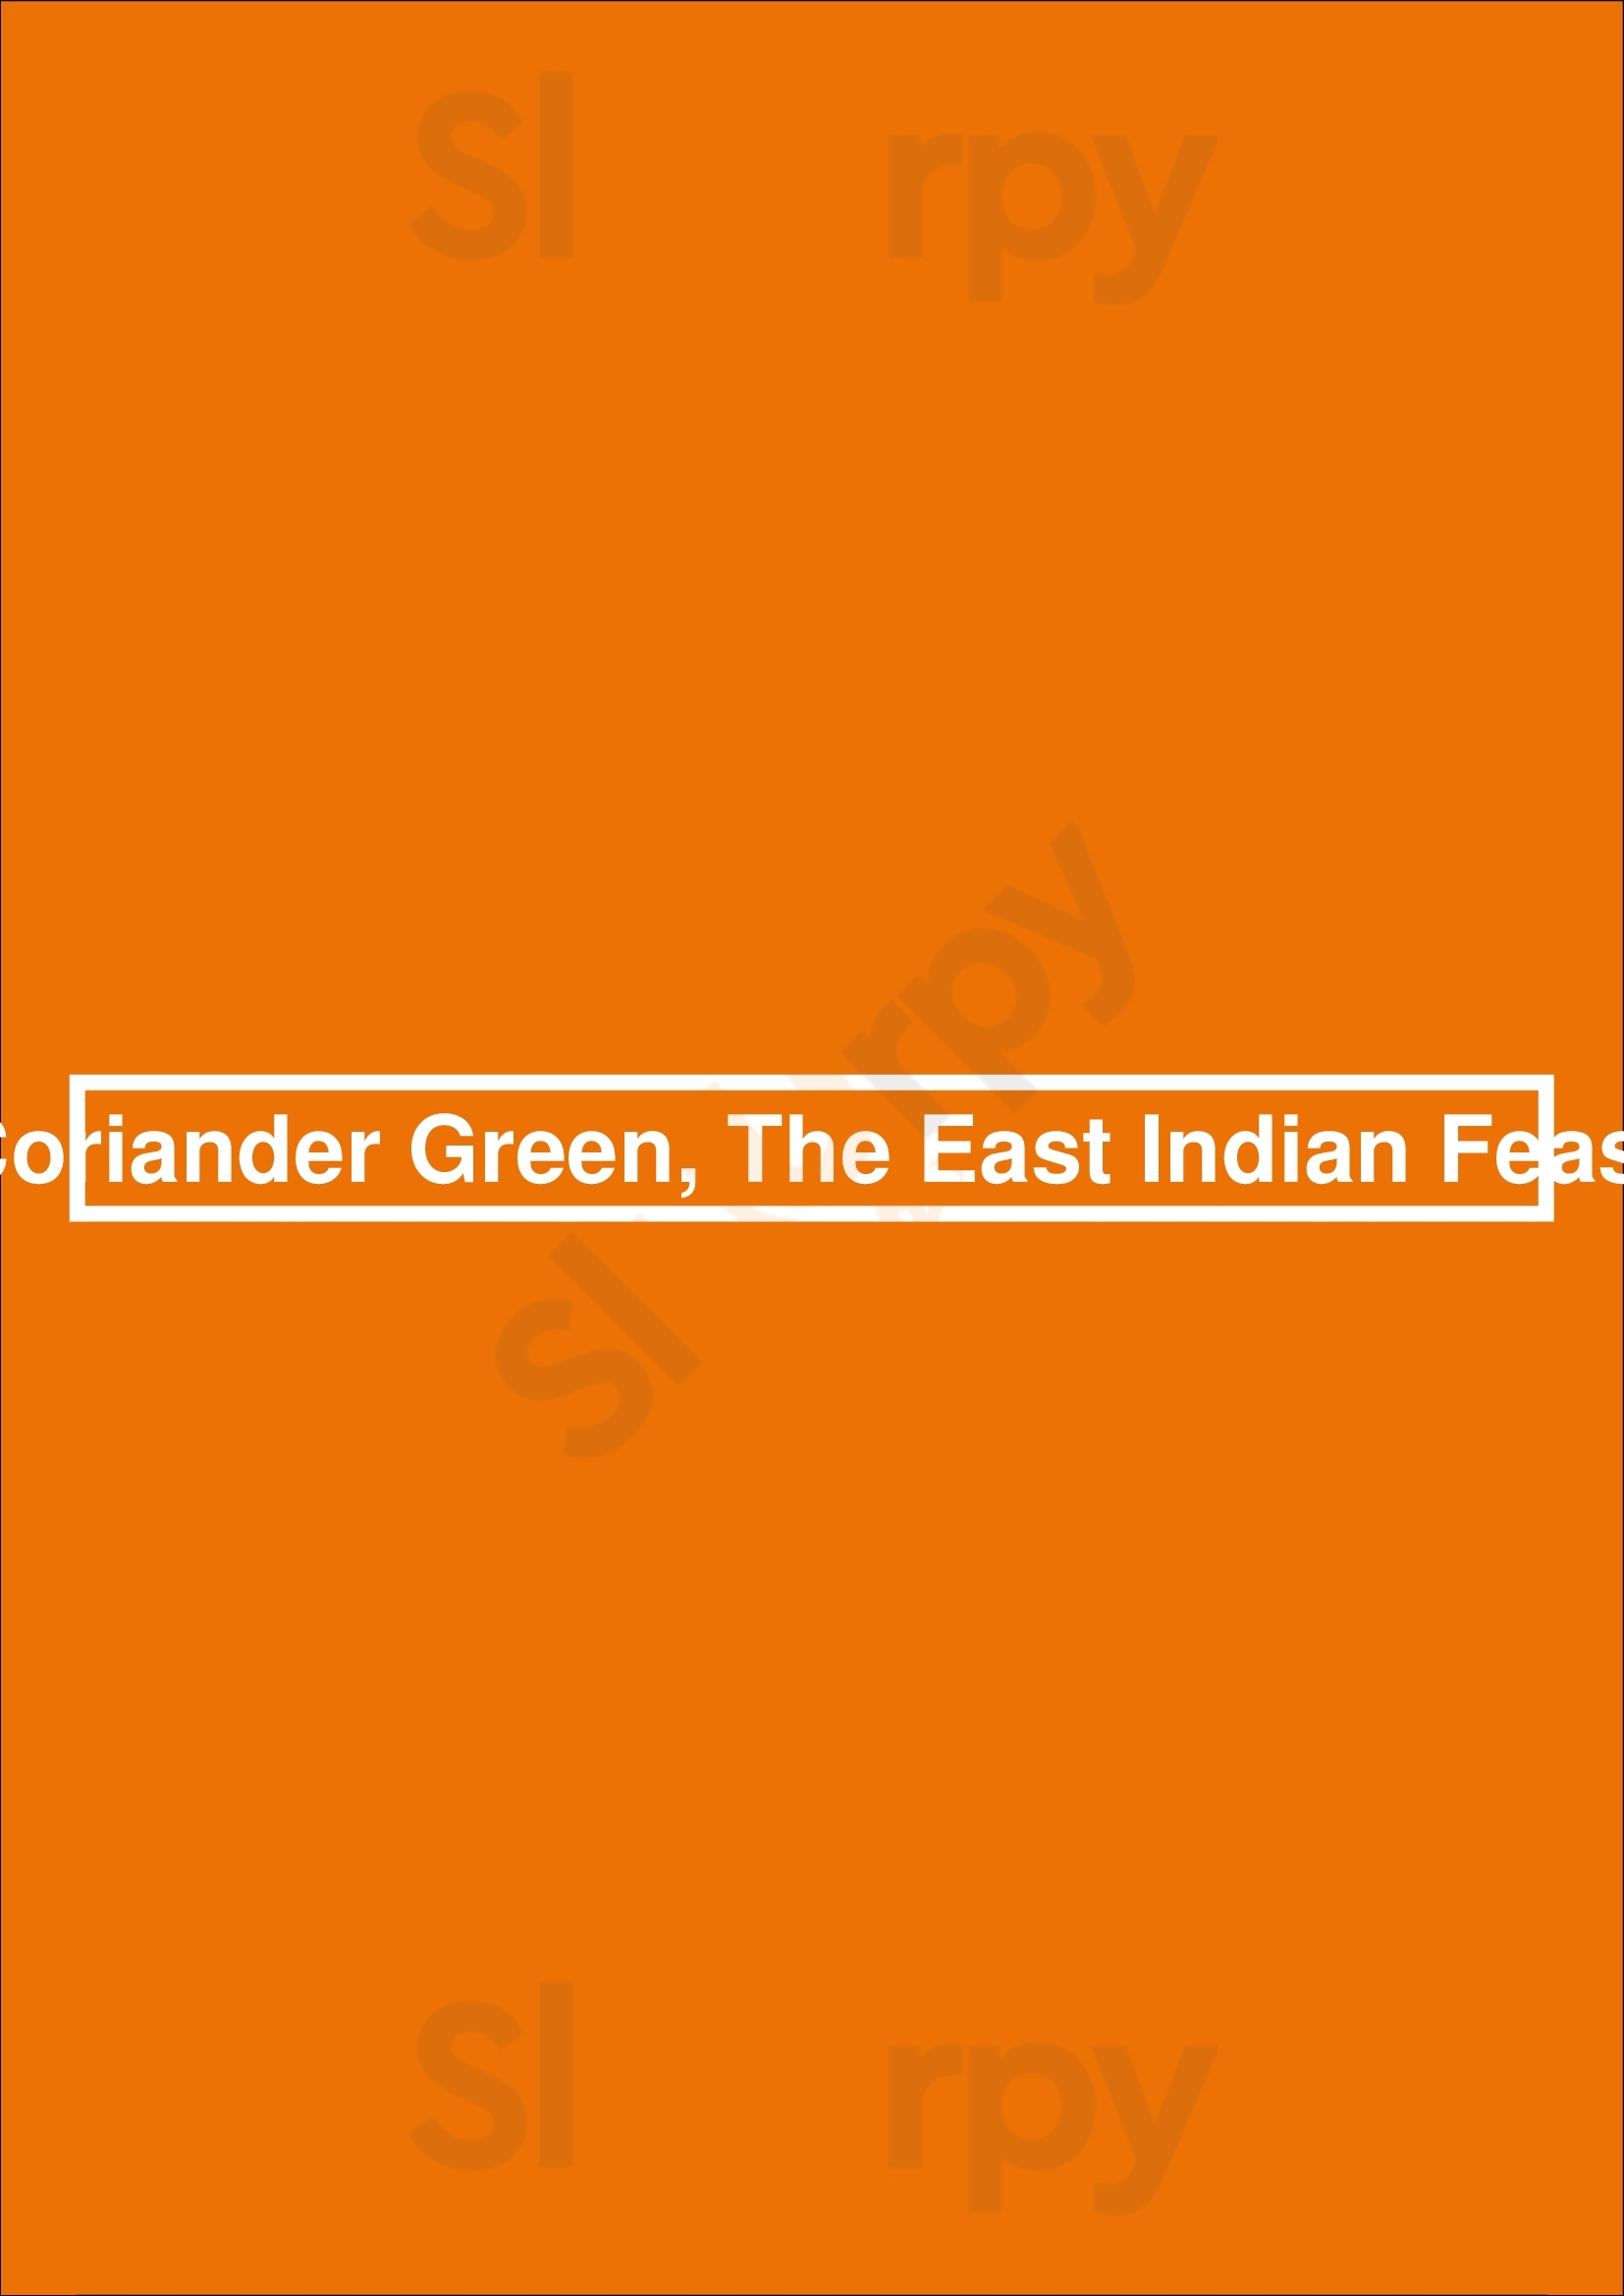 Coriander Green, The East Indian Feast Oakville Menu - 1